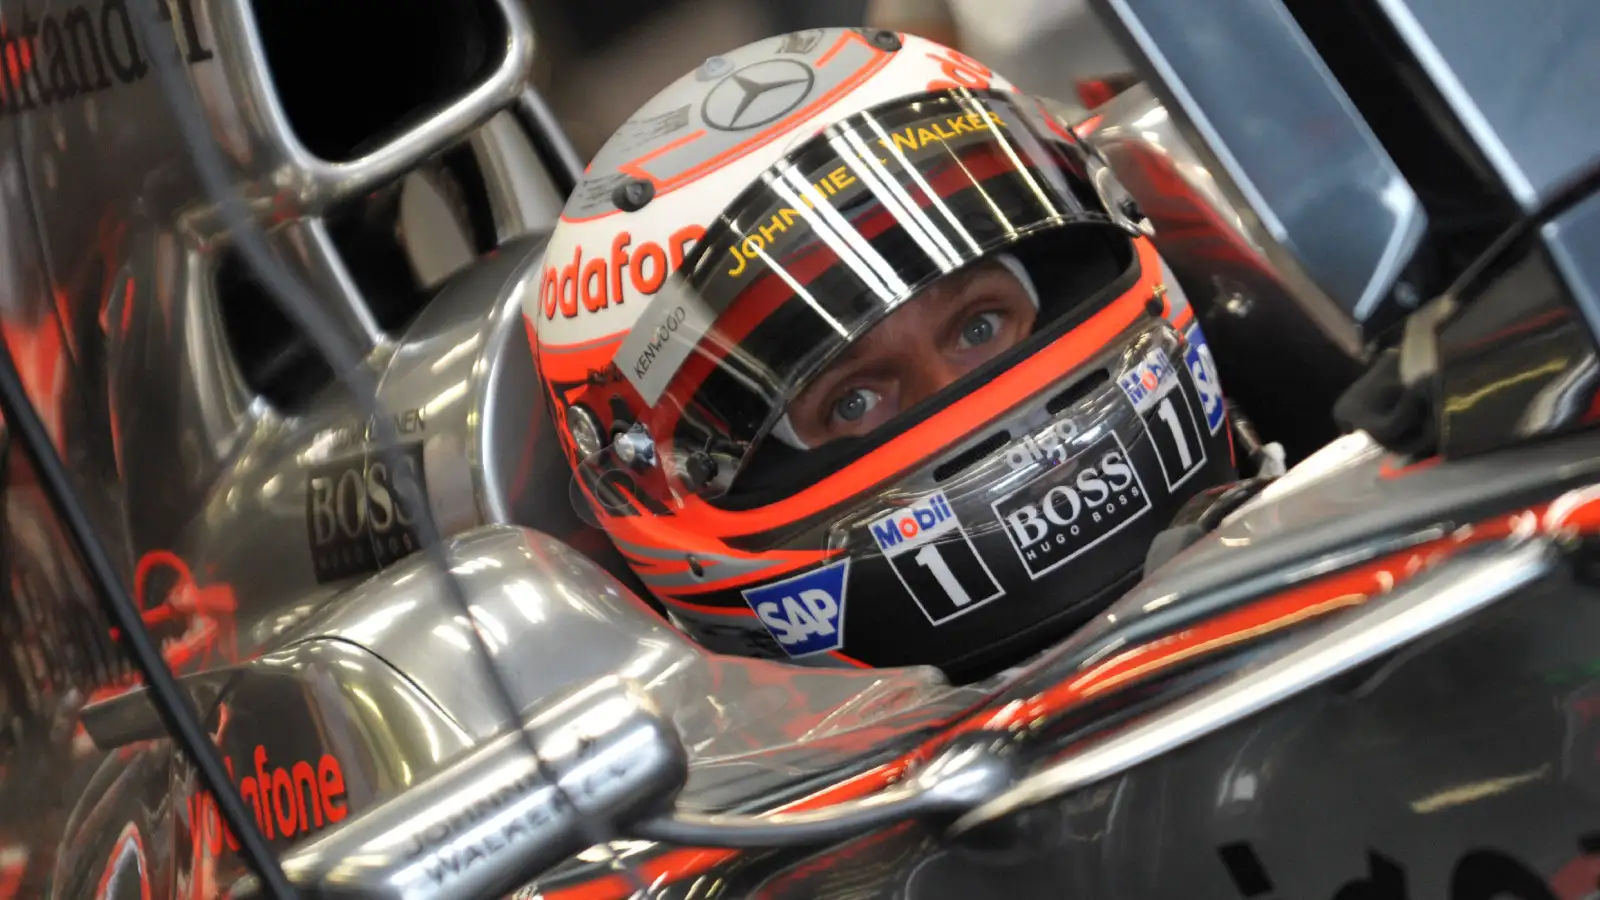 2008 - Finnish driver Heikki Kovalainen driving for McLaren.